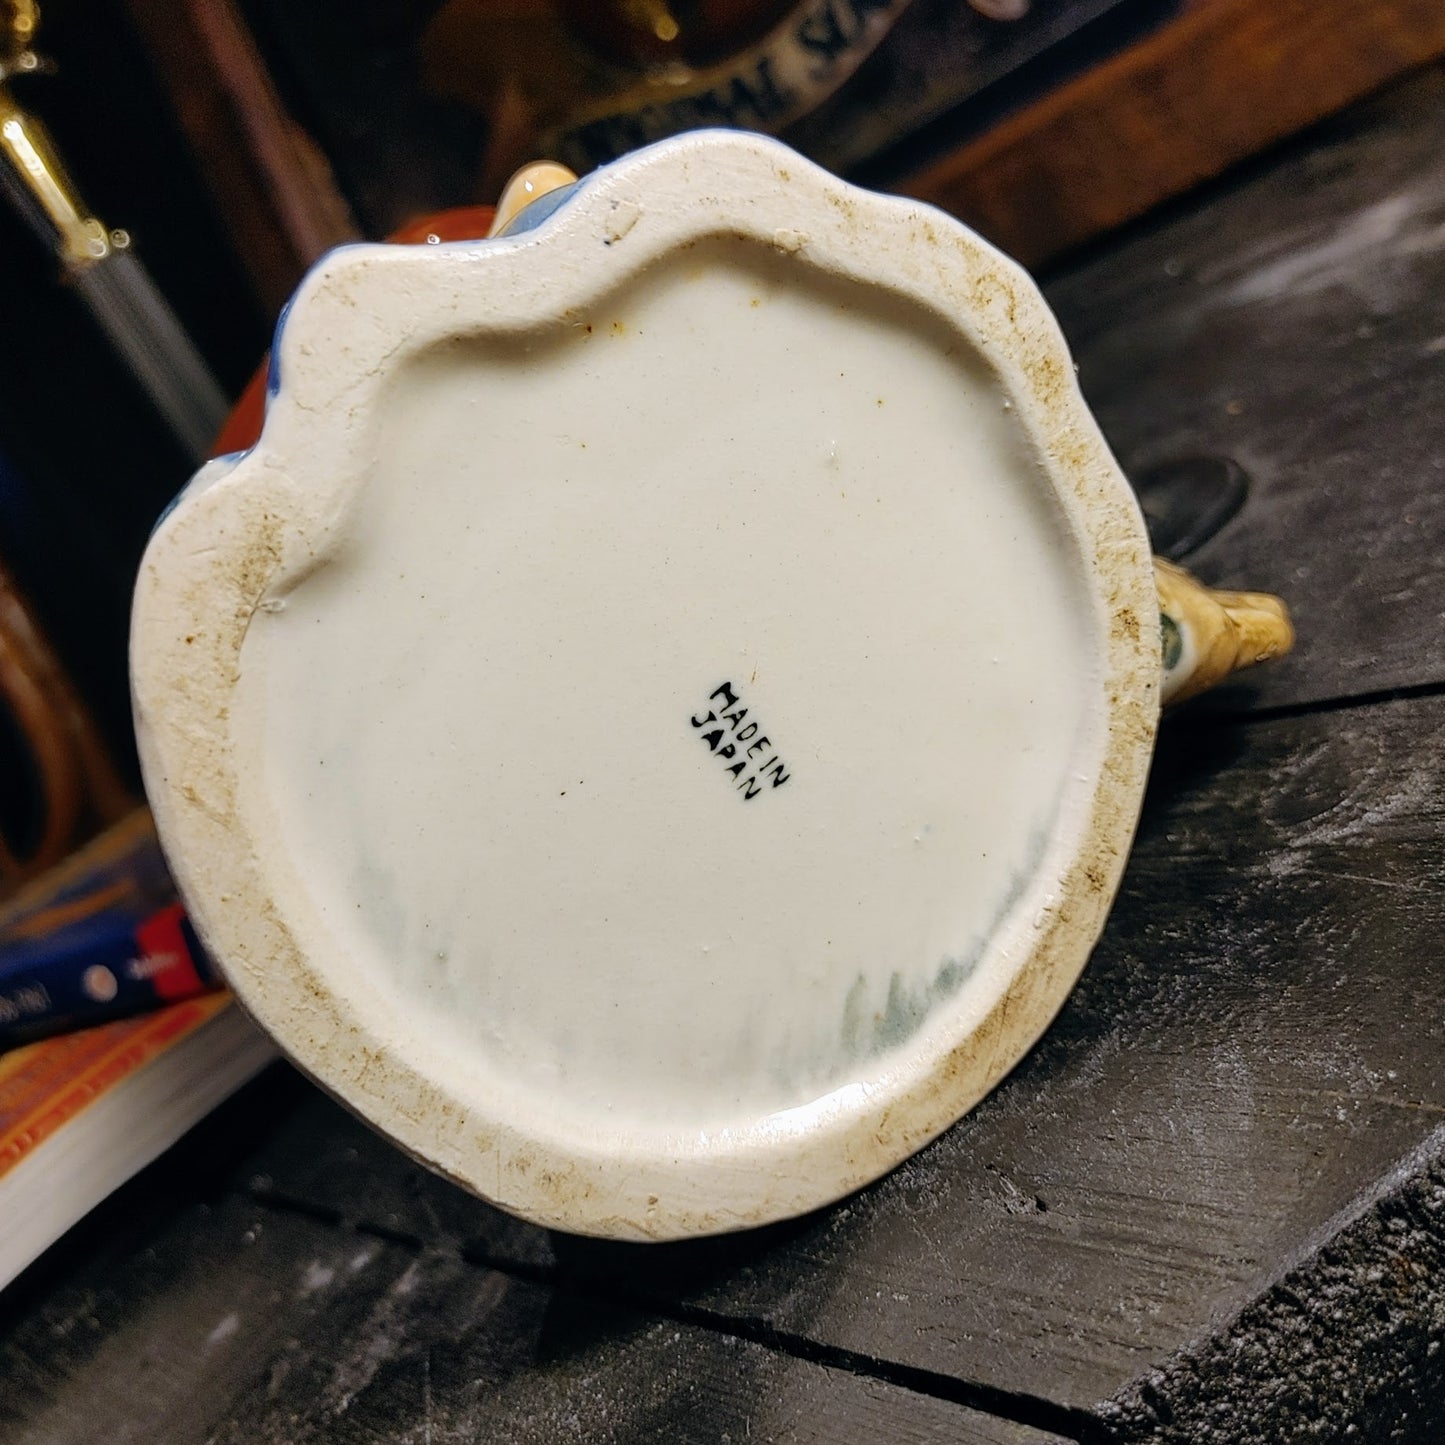 Pirate Mug cup